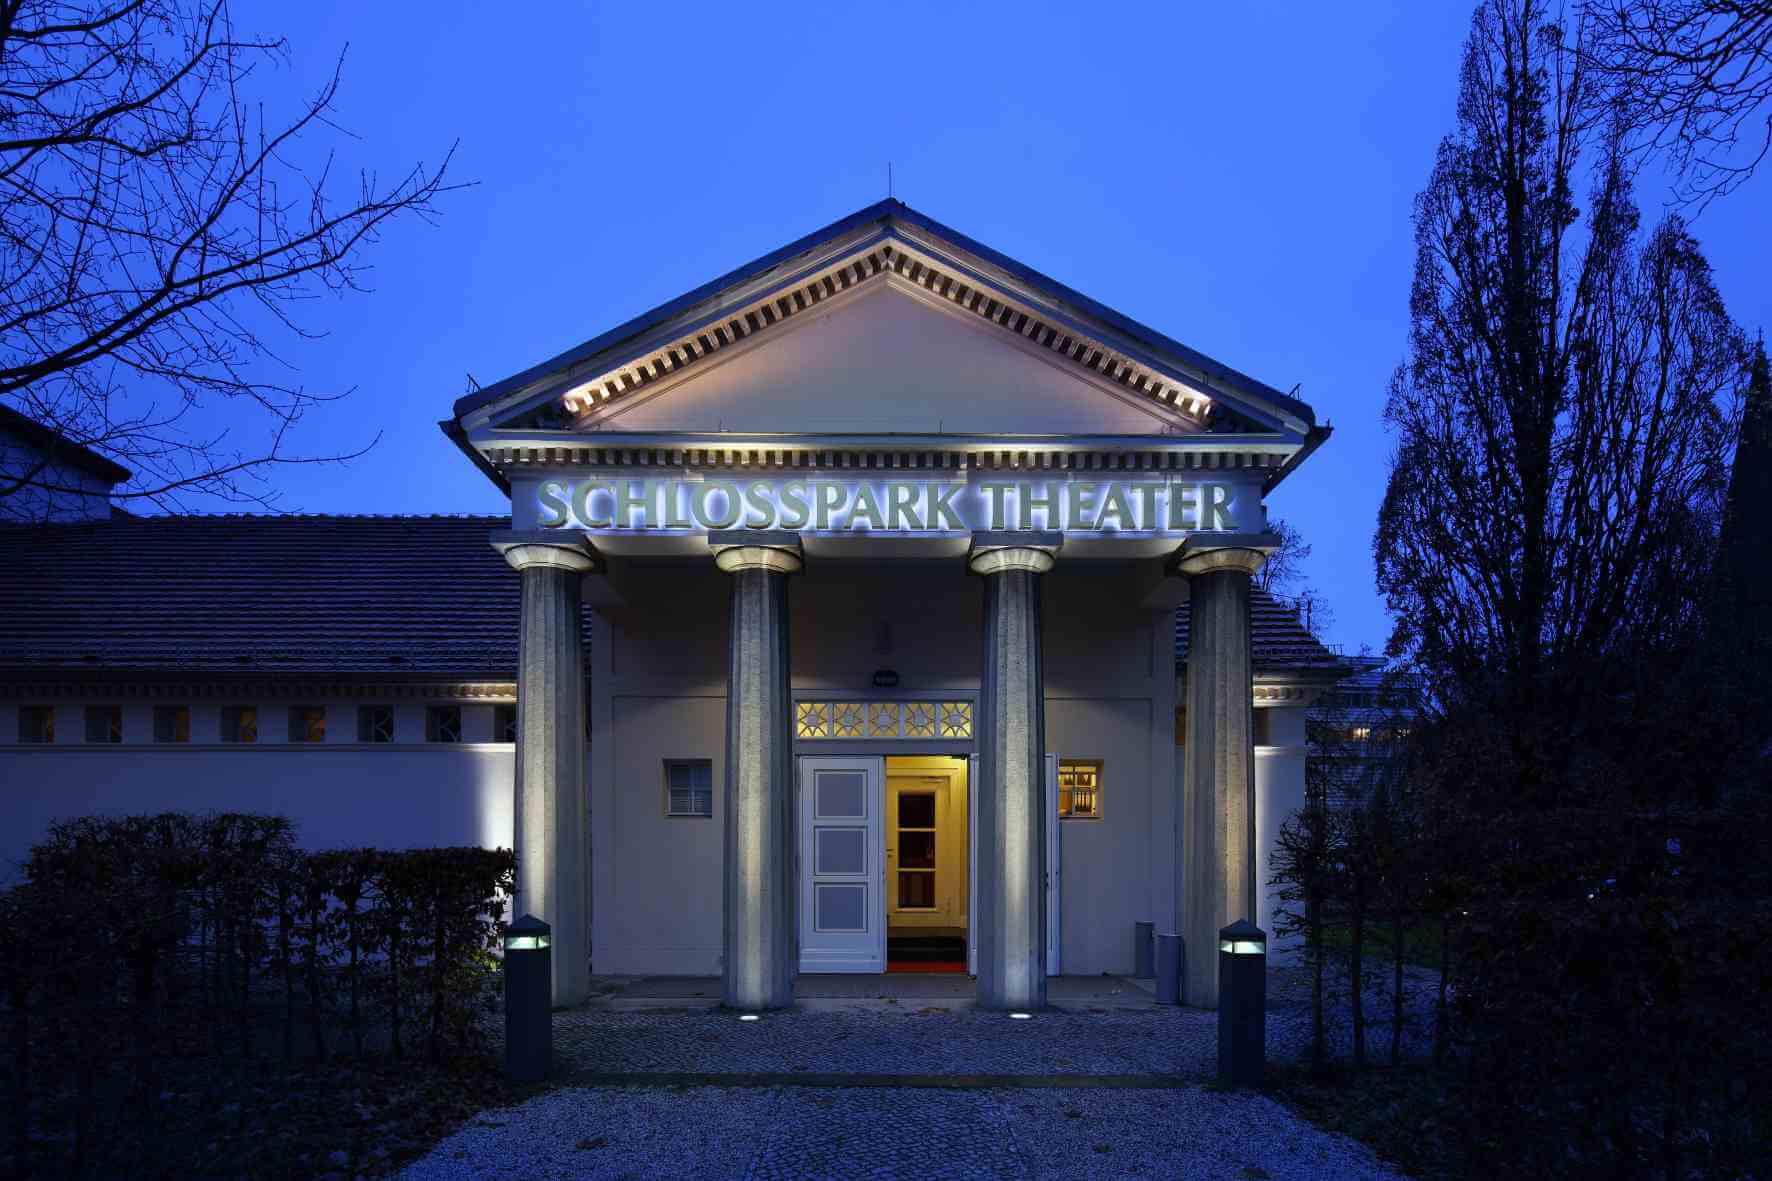 Schlosspark Theater braucht finanzielle Hilfe: BVV sagt Unterstützung zu